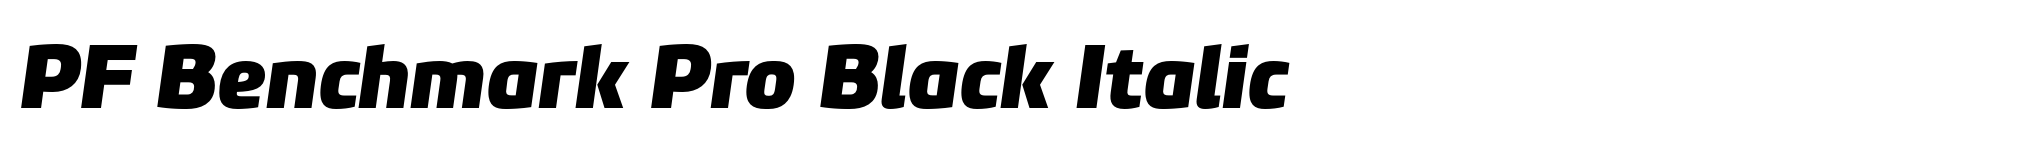 PF Benchmark Pro Black Italic image